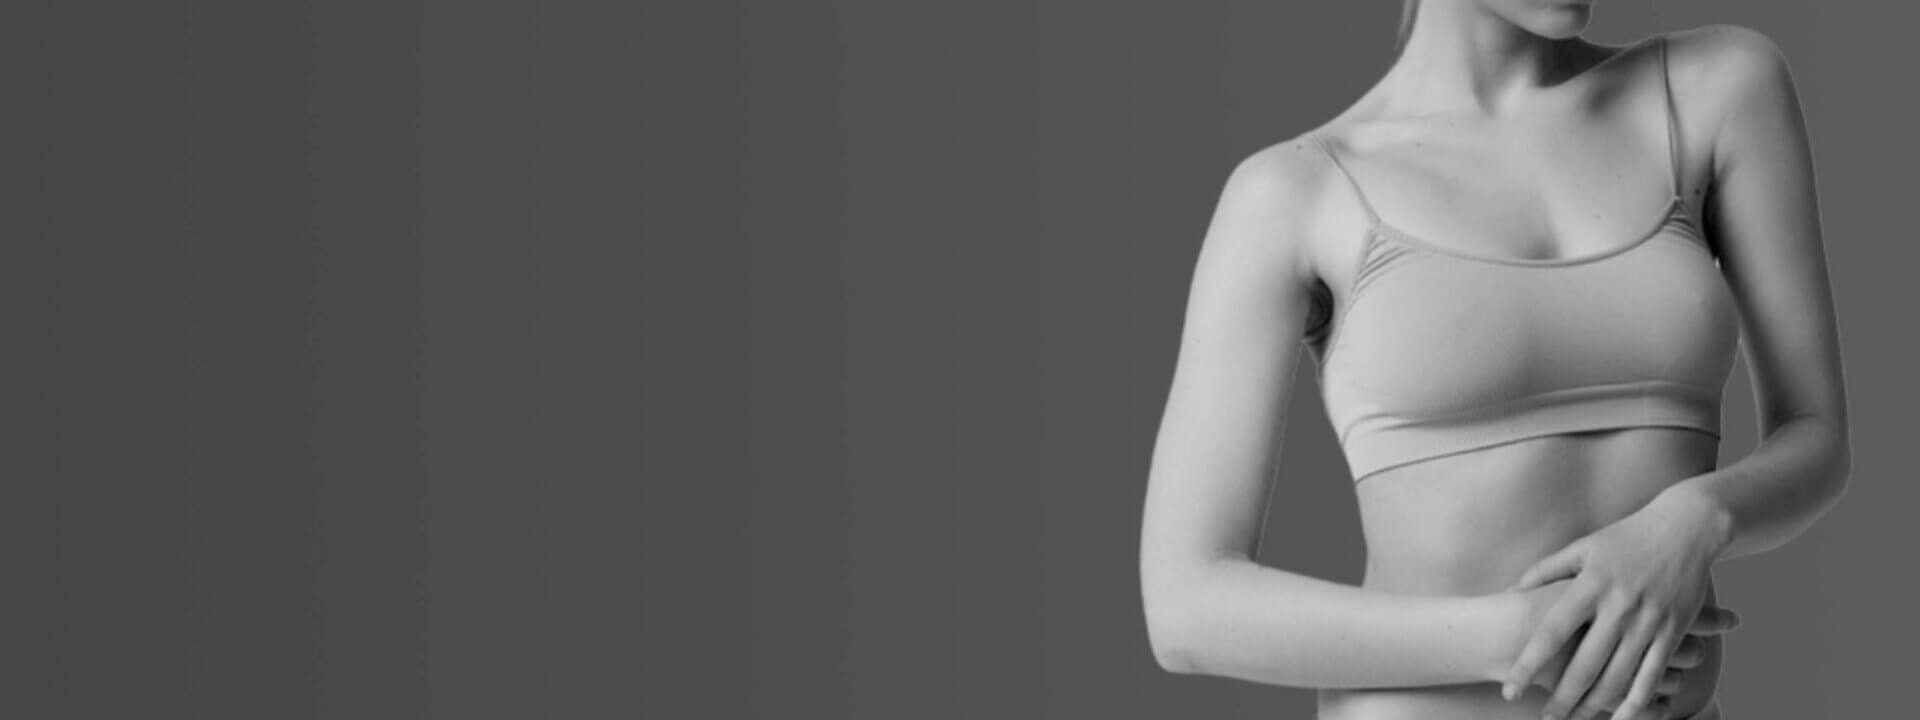 Mini Boob Job London  Mini Breast Augmentation & Implants UK